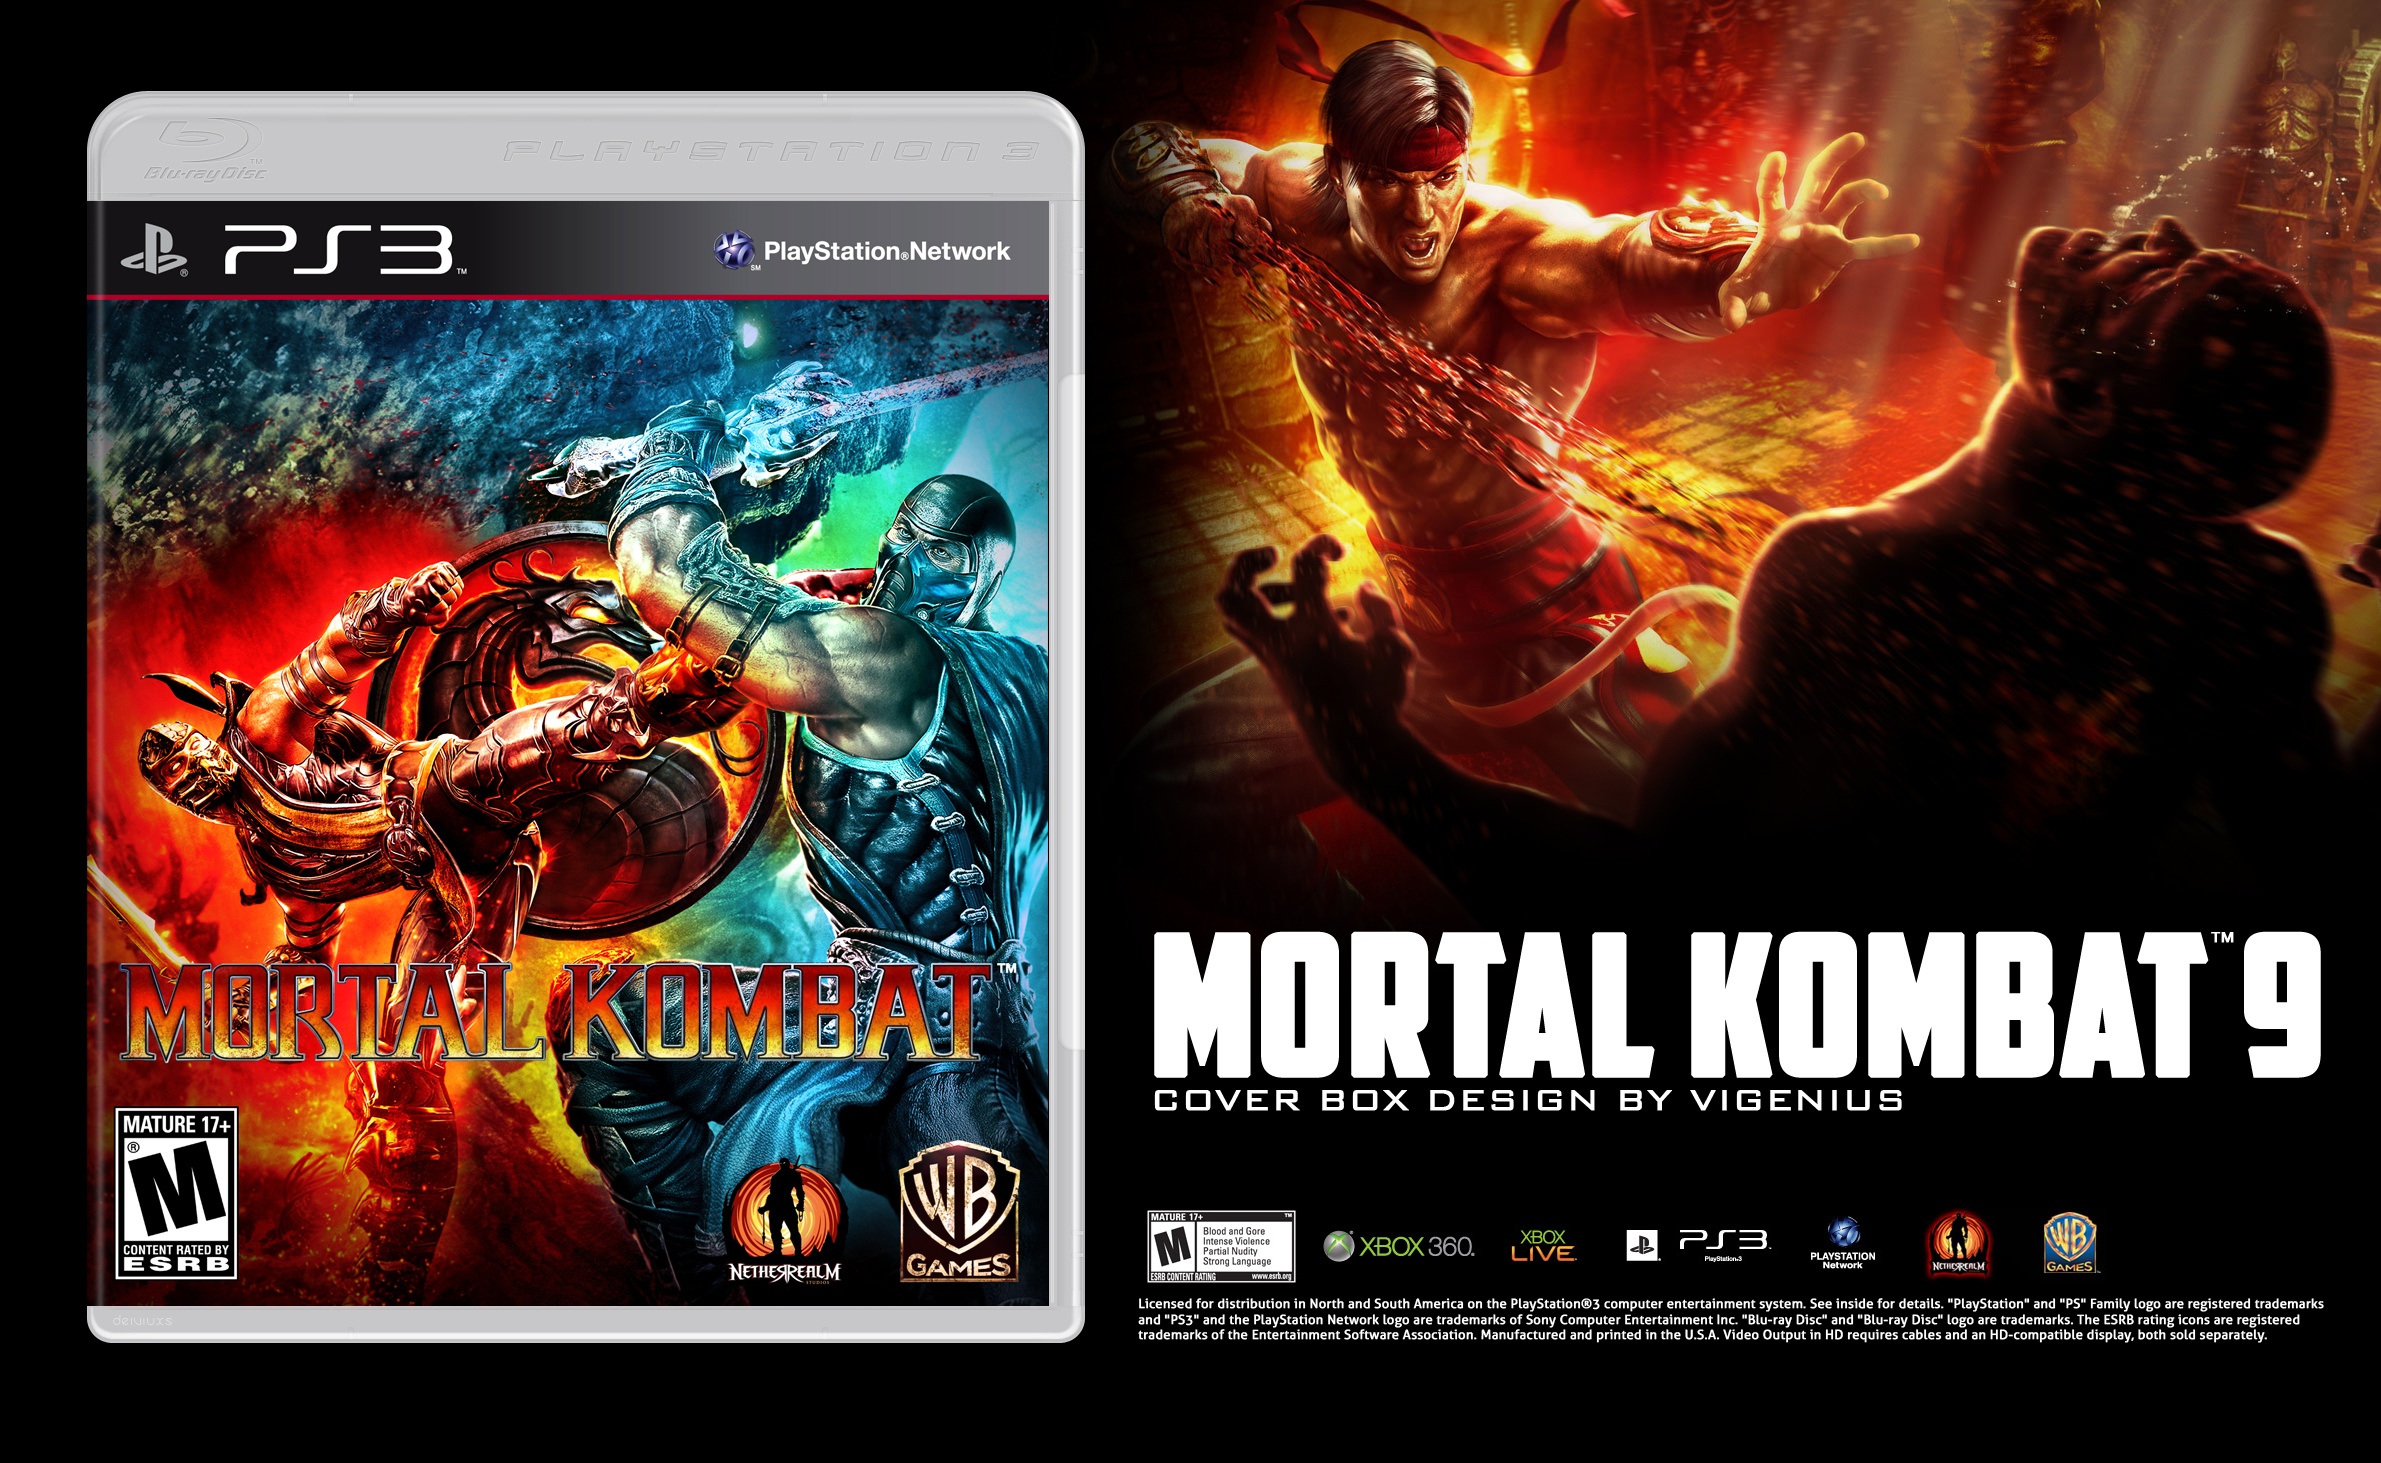 Mortal Kombat 9 box cover